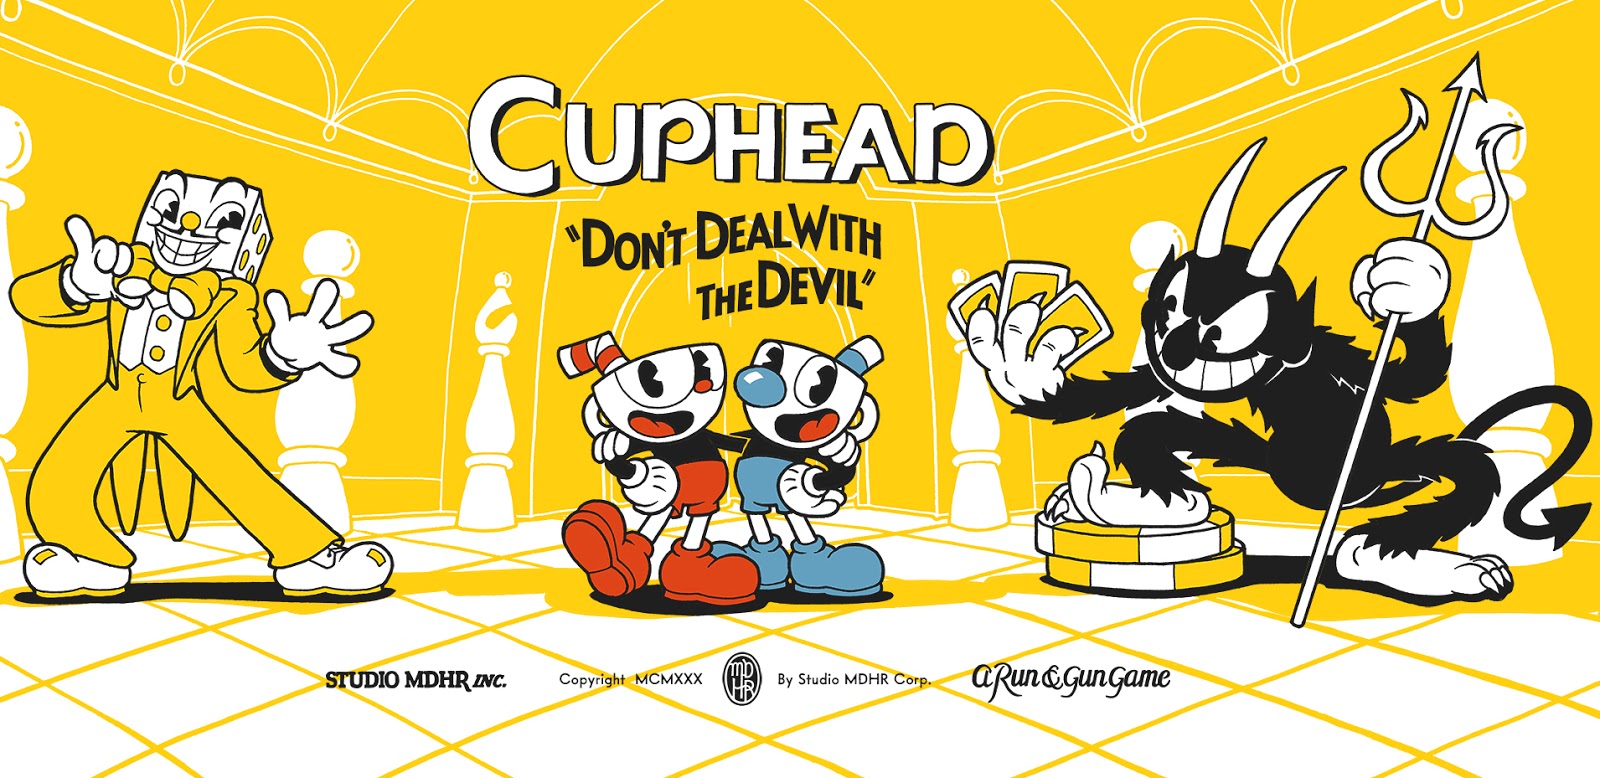 Jogue Cuphead online gratuitamente sem downloads